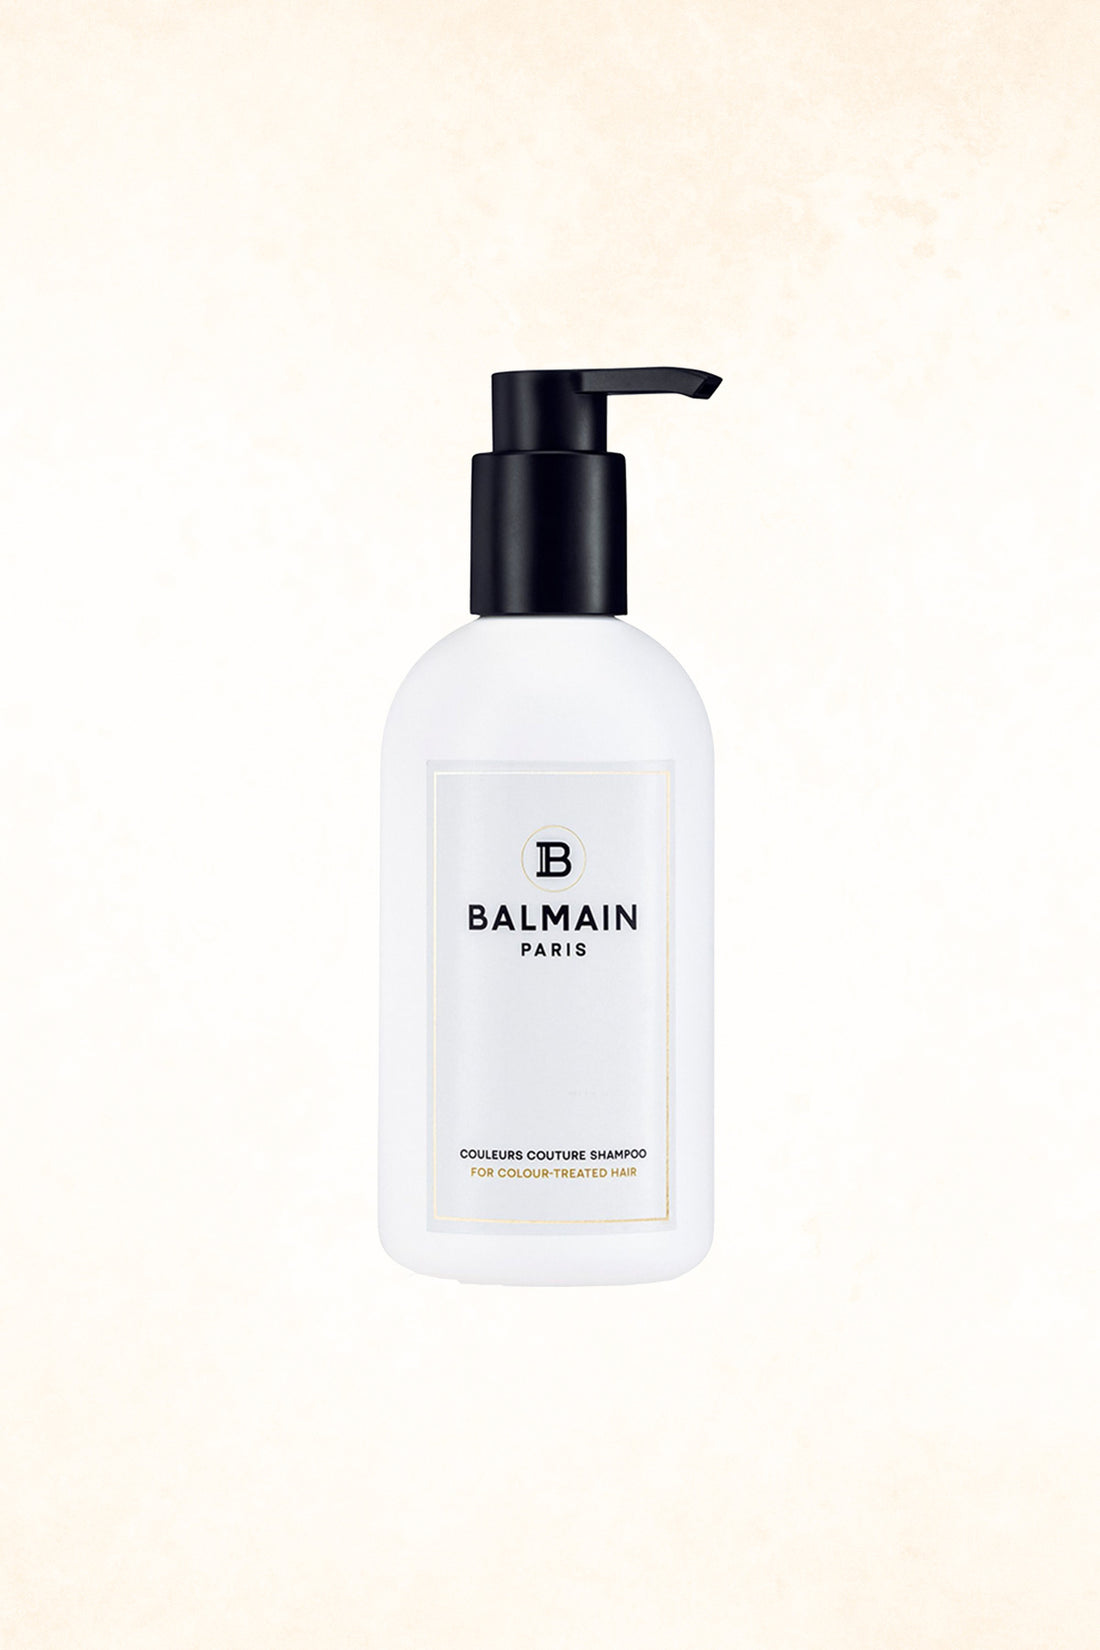 Balmain - Couleurs Couture Shampoo  - 300ml